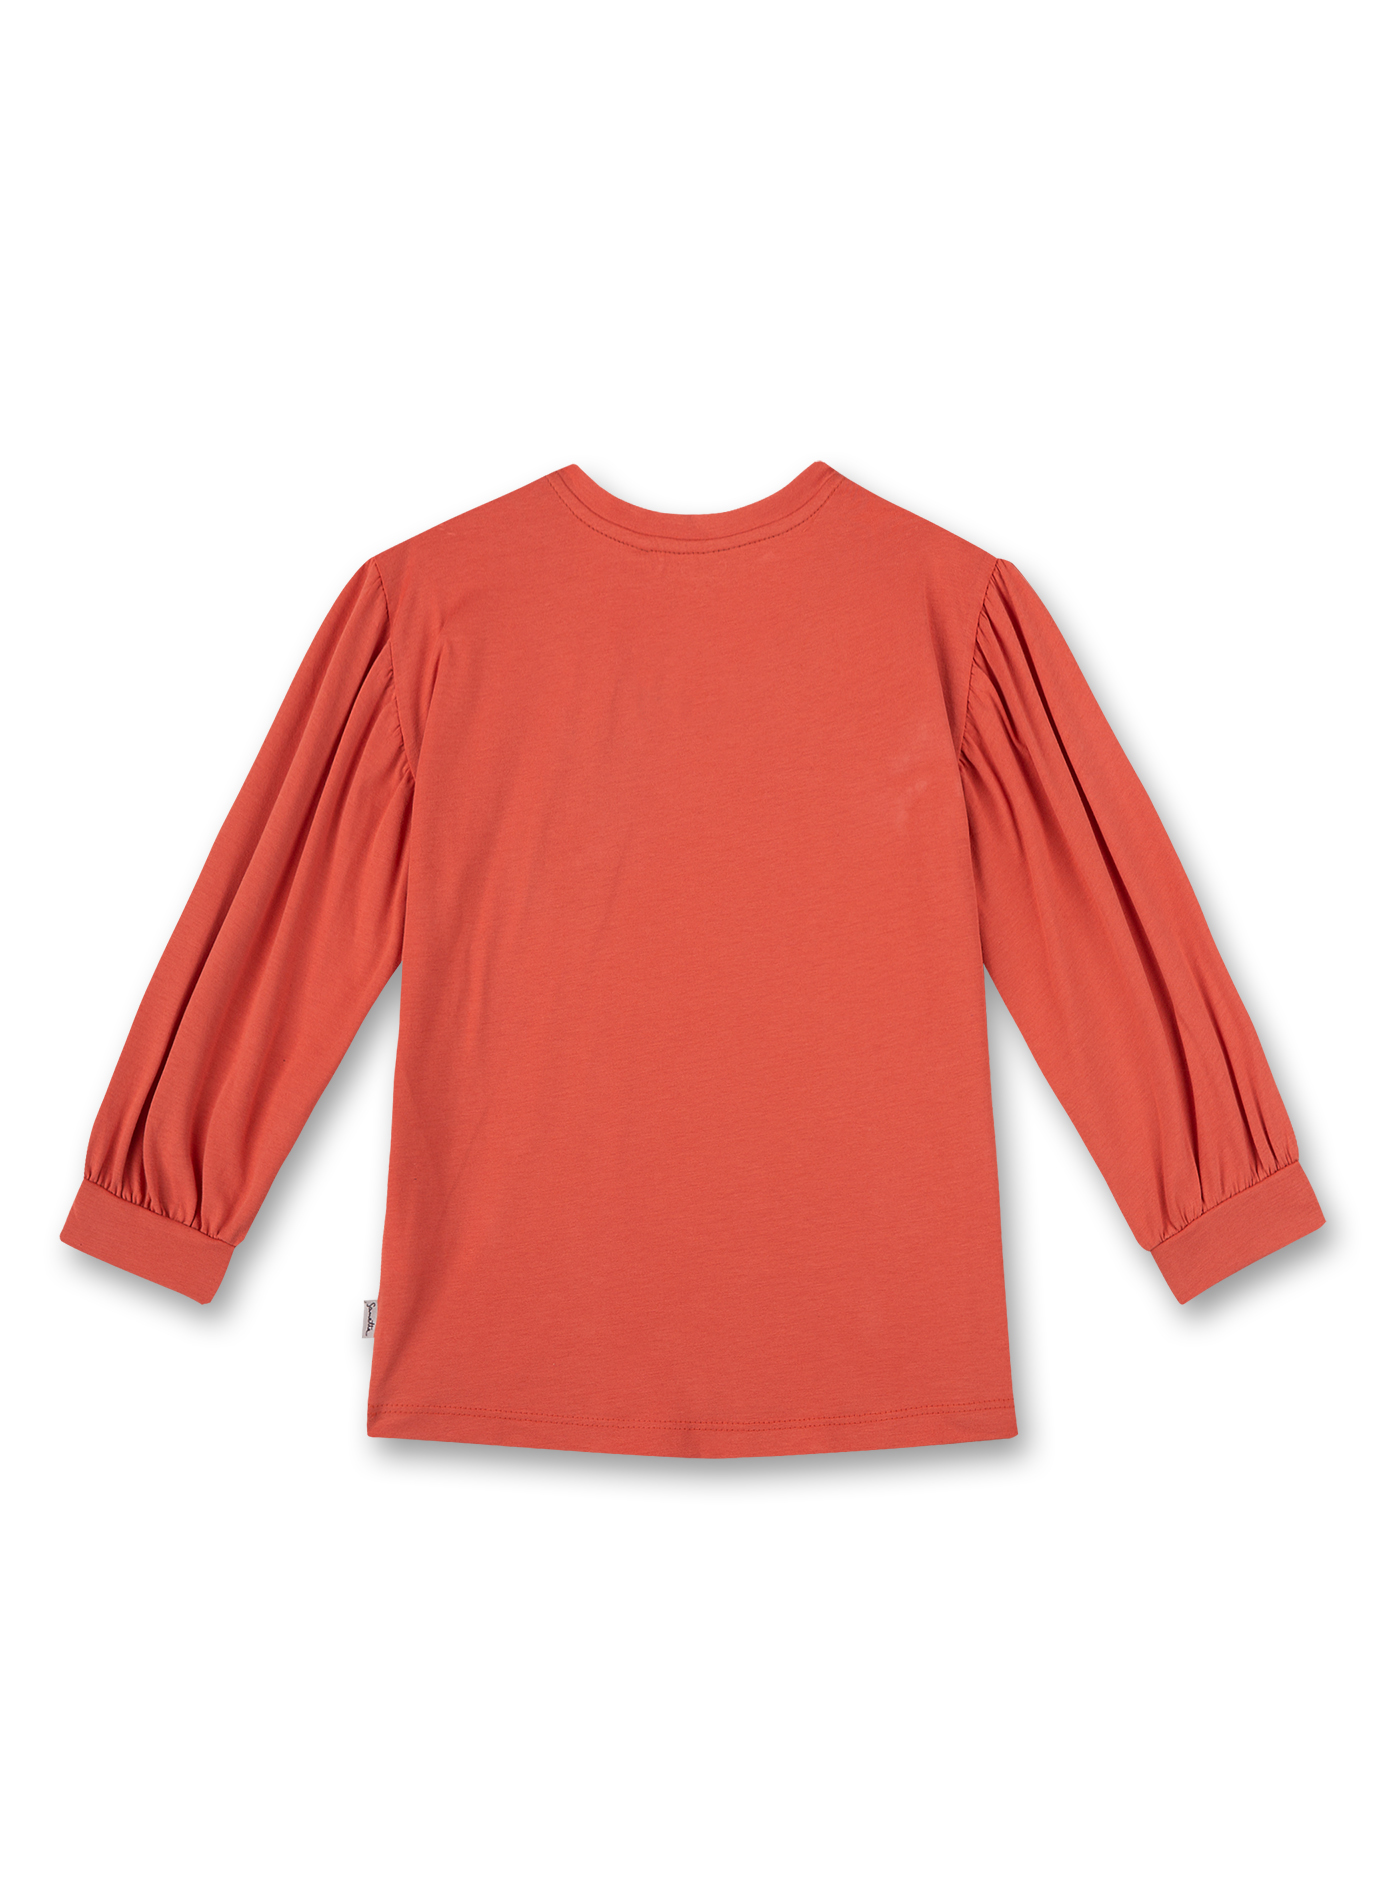 Mädchen-Shirt langarm Orange Flowers for You